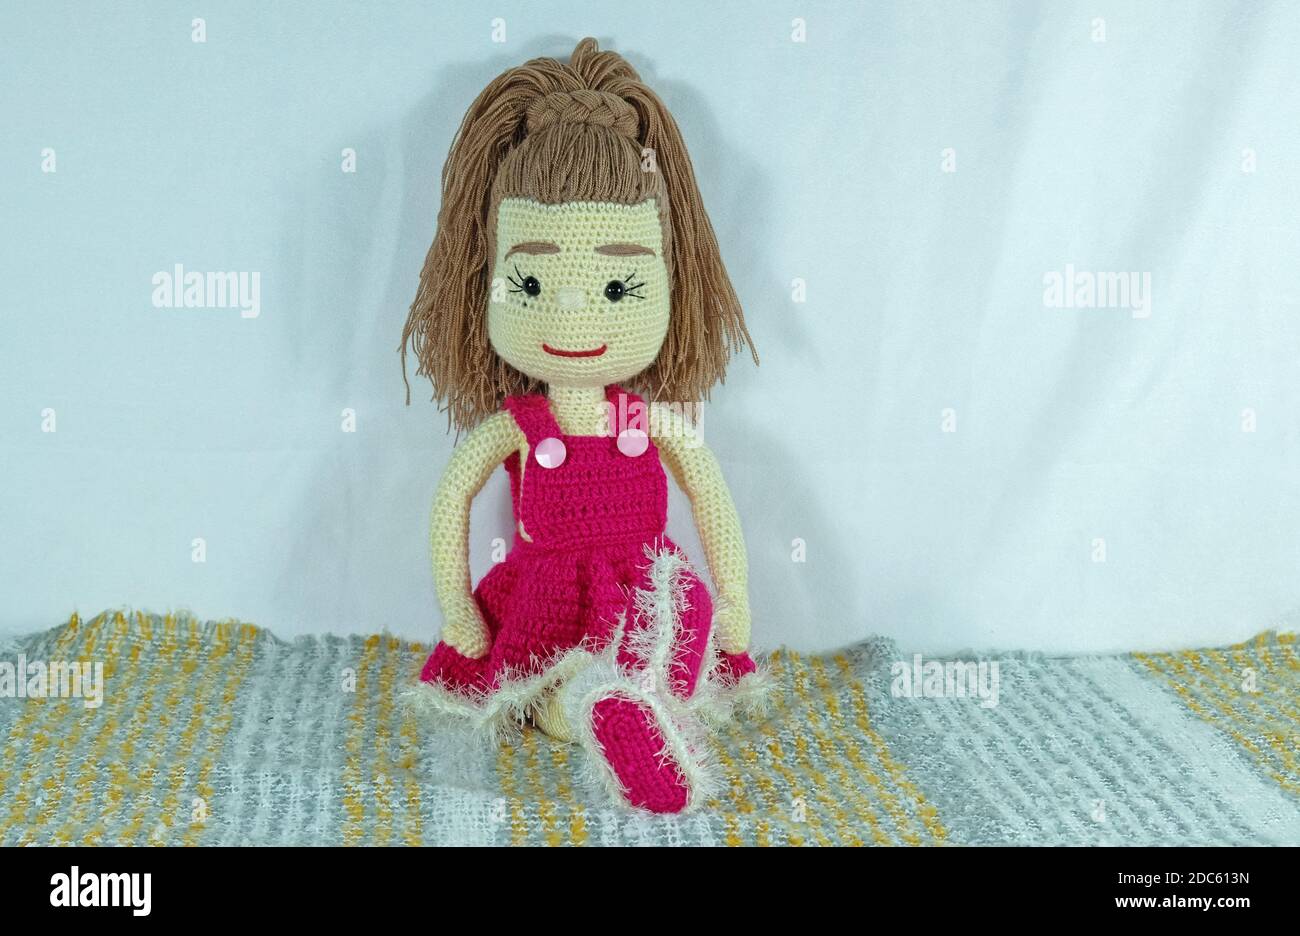 Blondie crochet doll Stock Photo